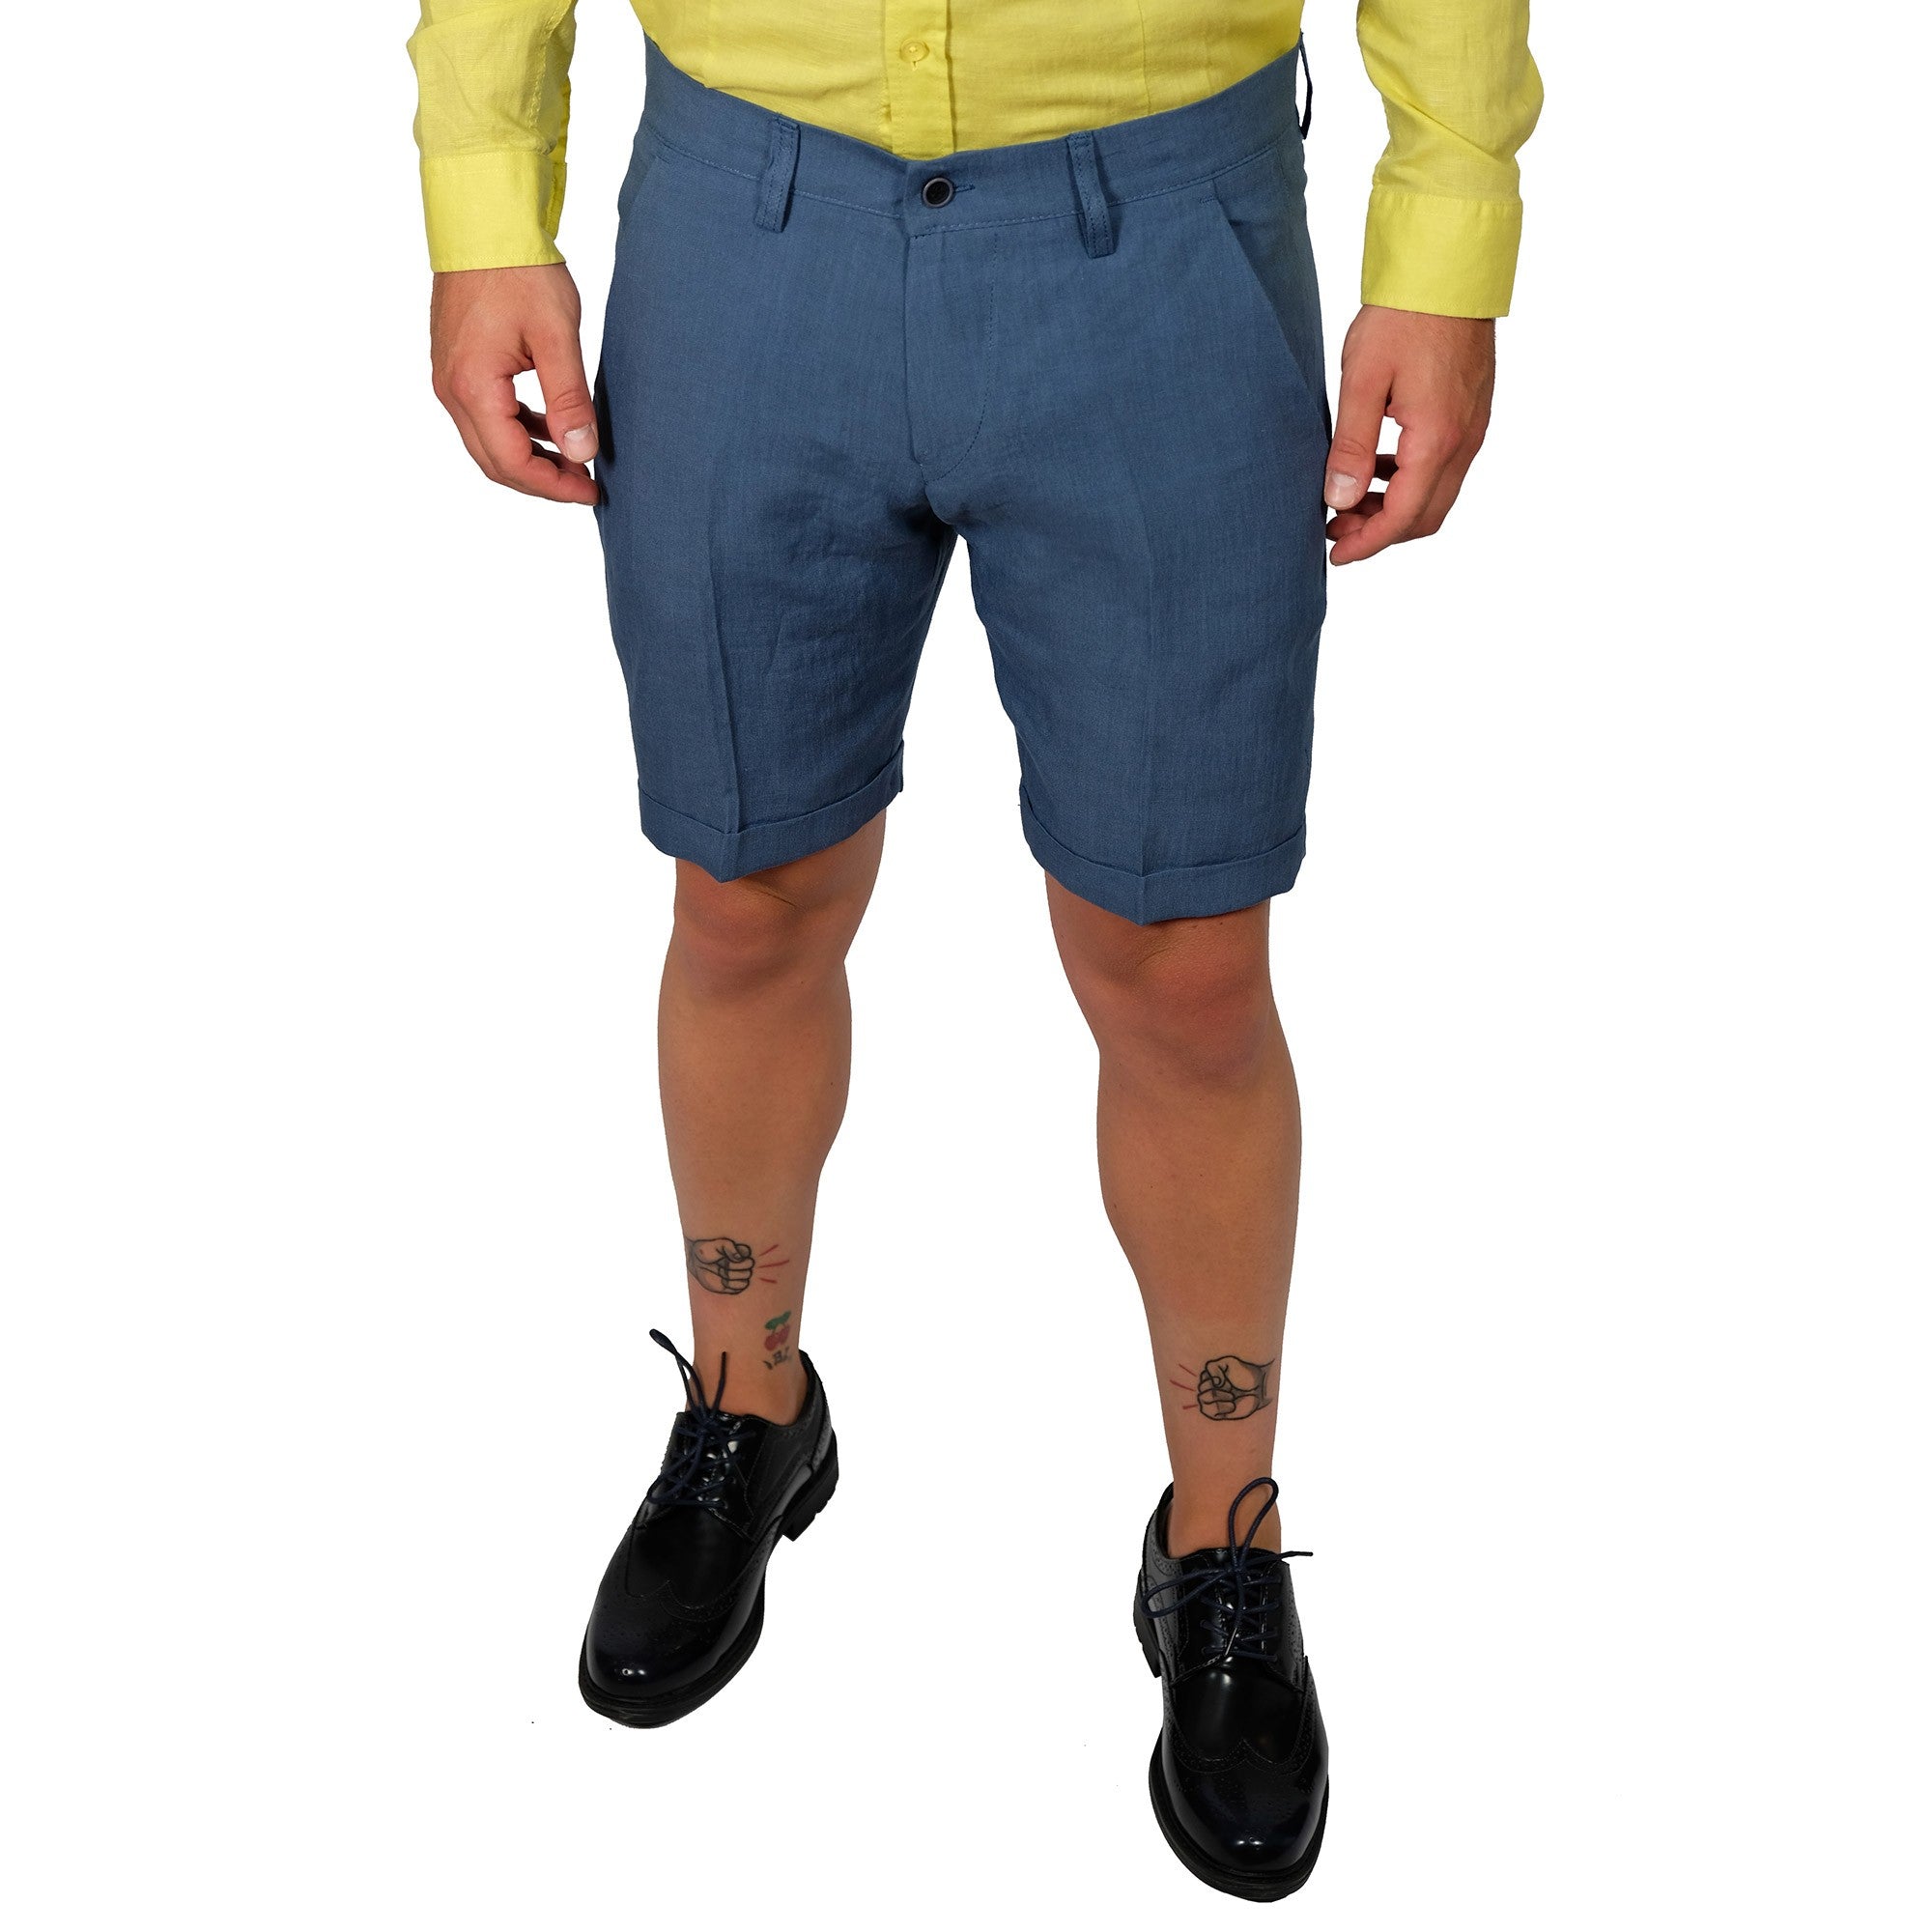 Bermuda shorts in blue cotton